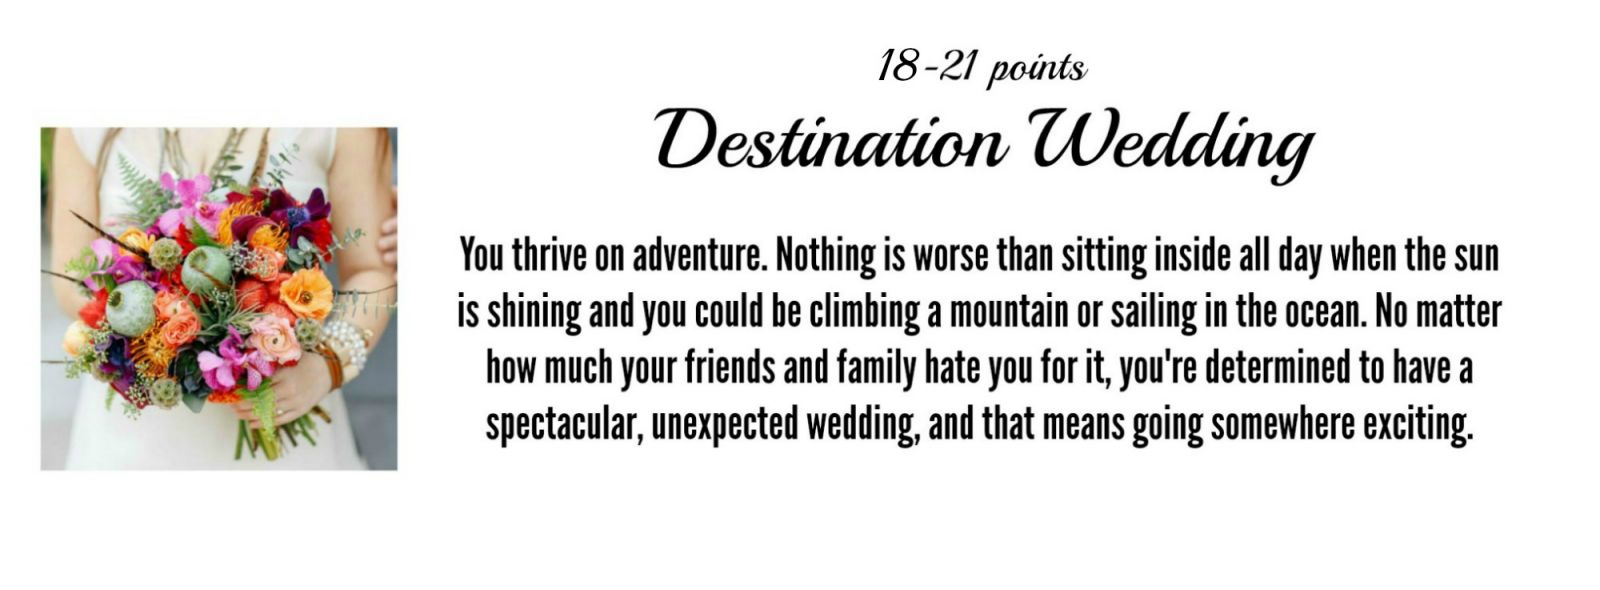 Destination Wedding Ideas